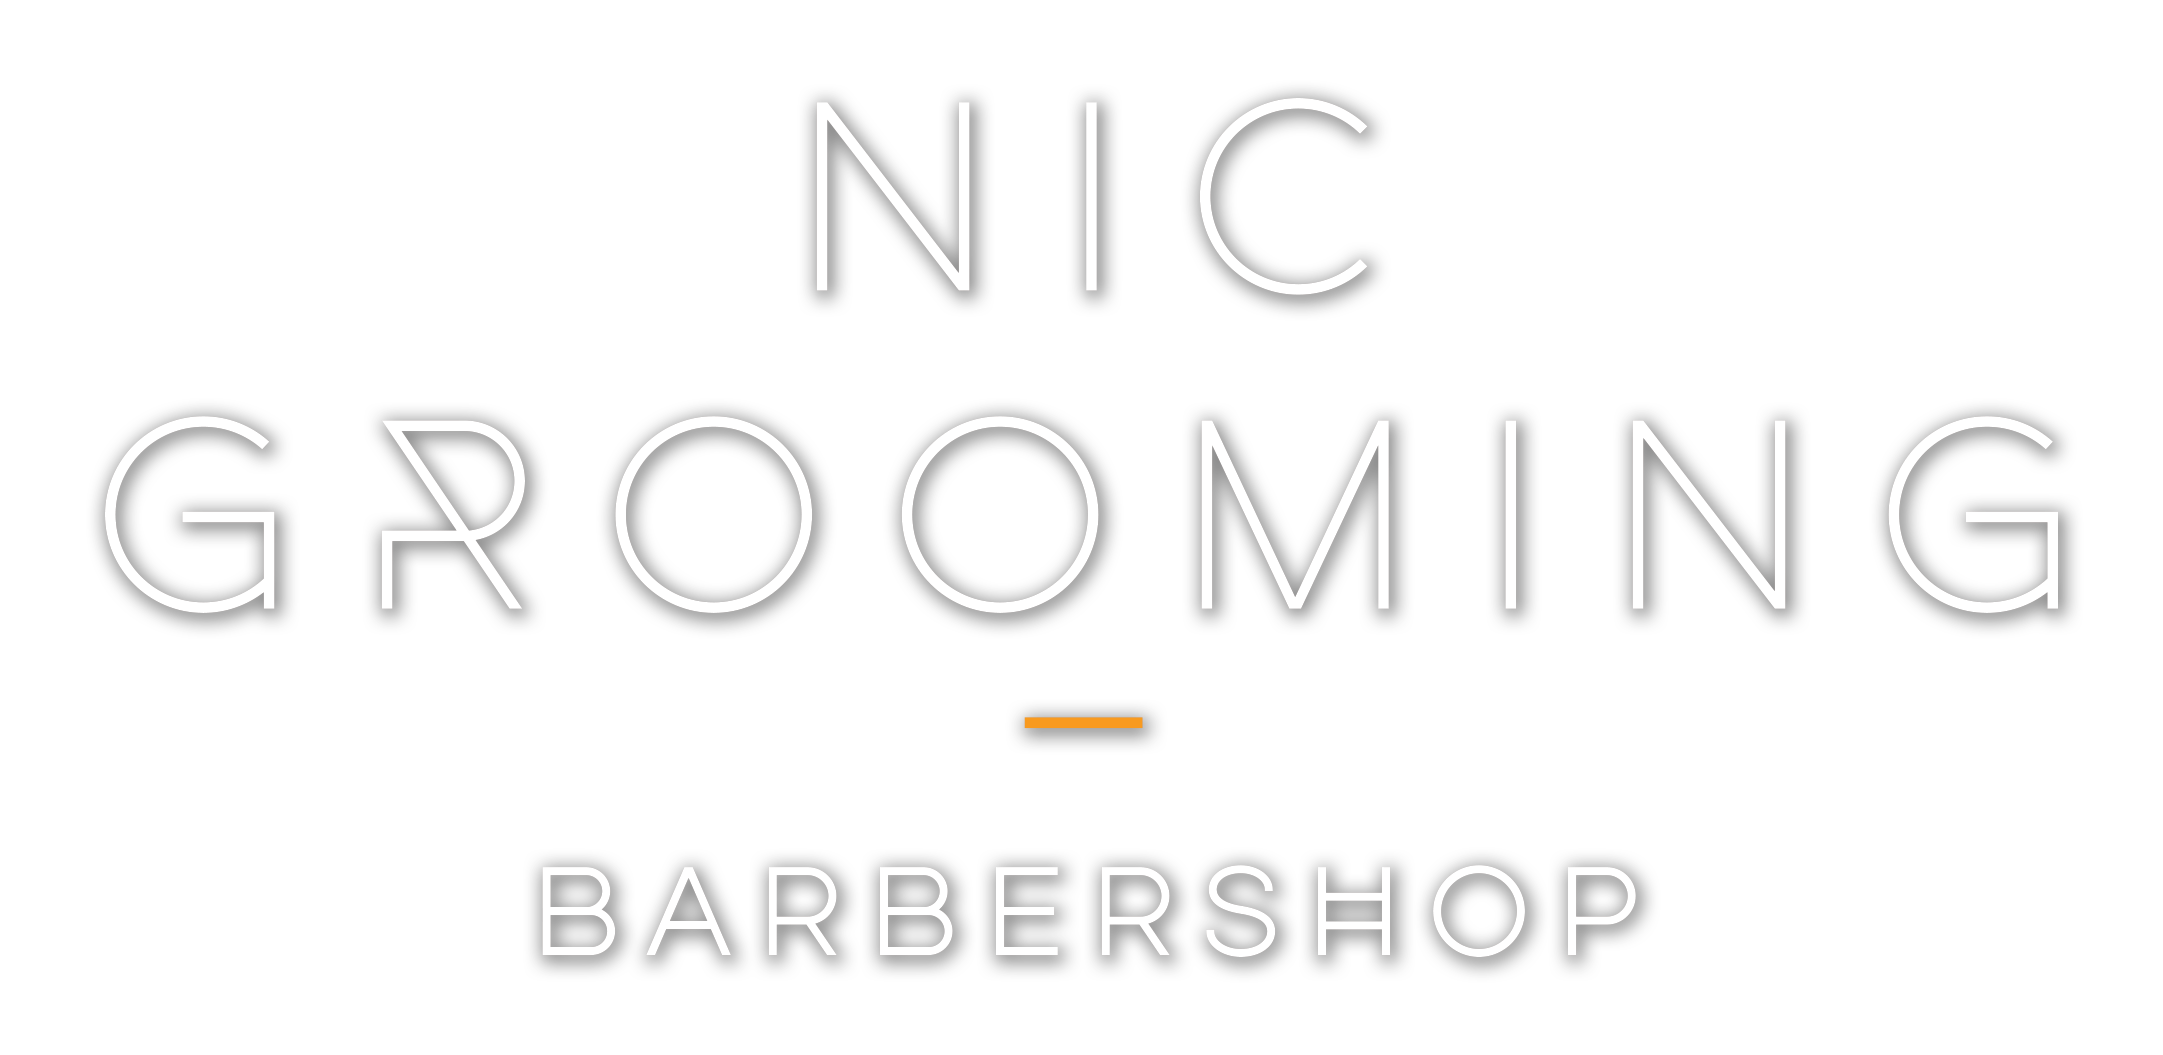 Nic Grooming Barber Shop